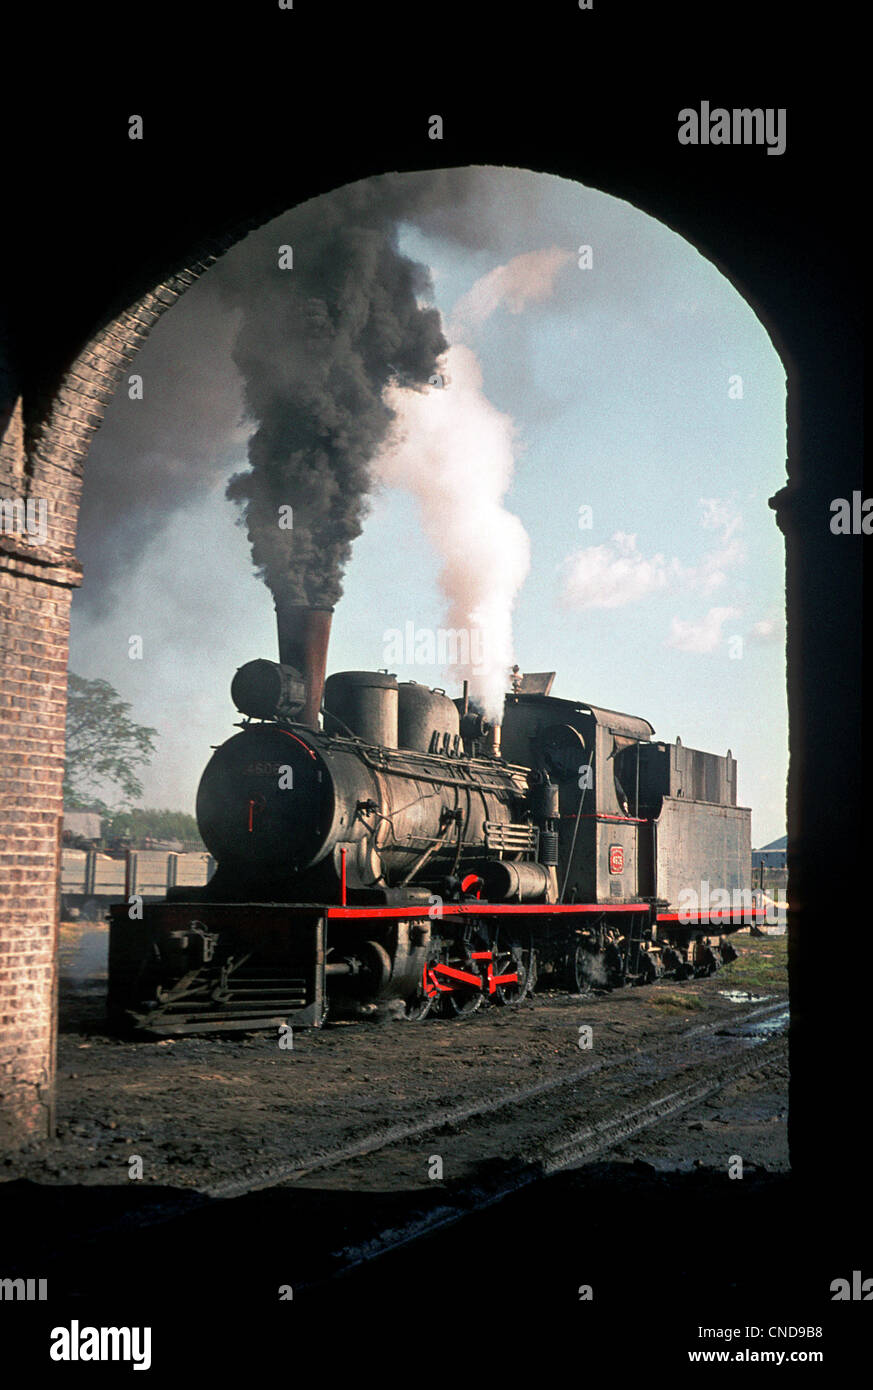 29 Ferrocarril general manuel belgrano rolling stock Images: PICRYL -  Public Domain Media Search Engine Public Domain Search